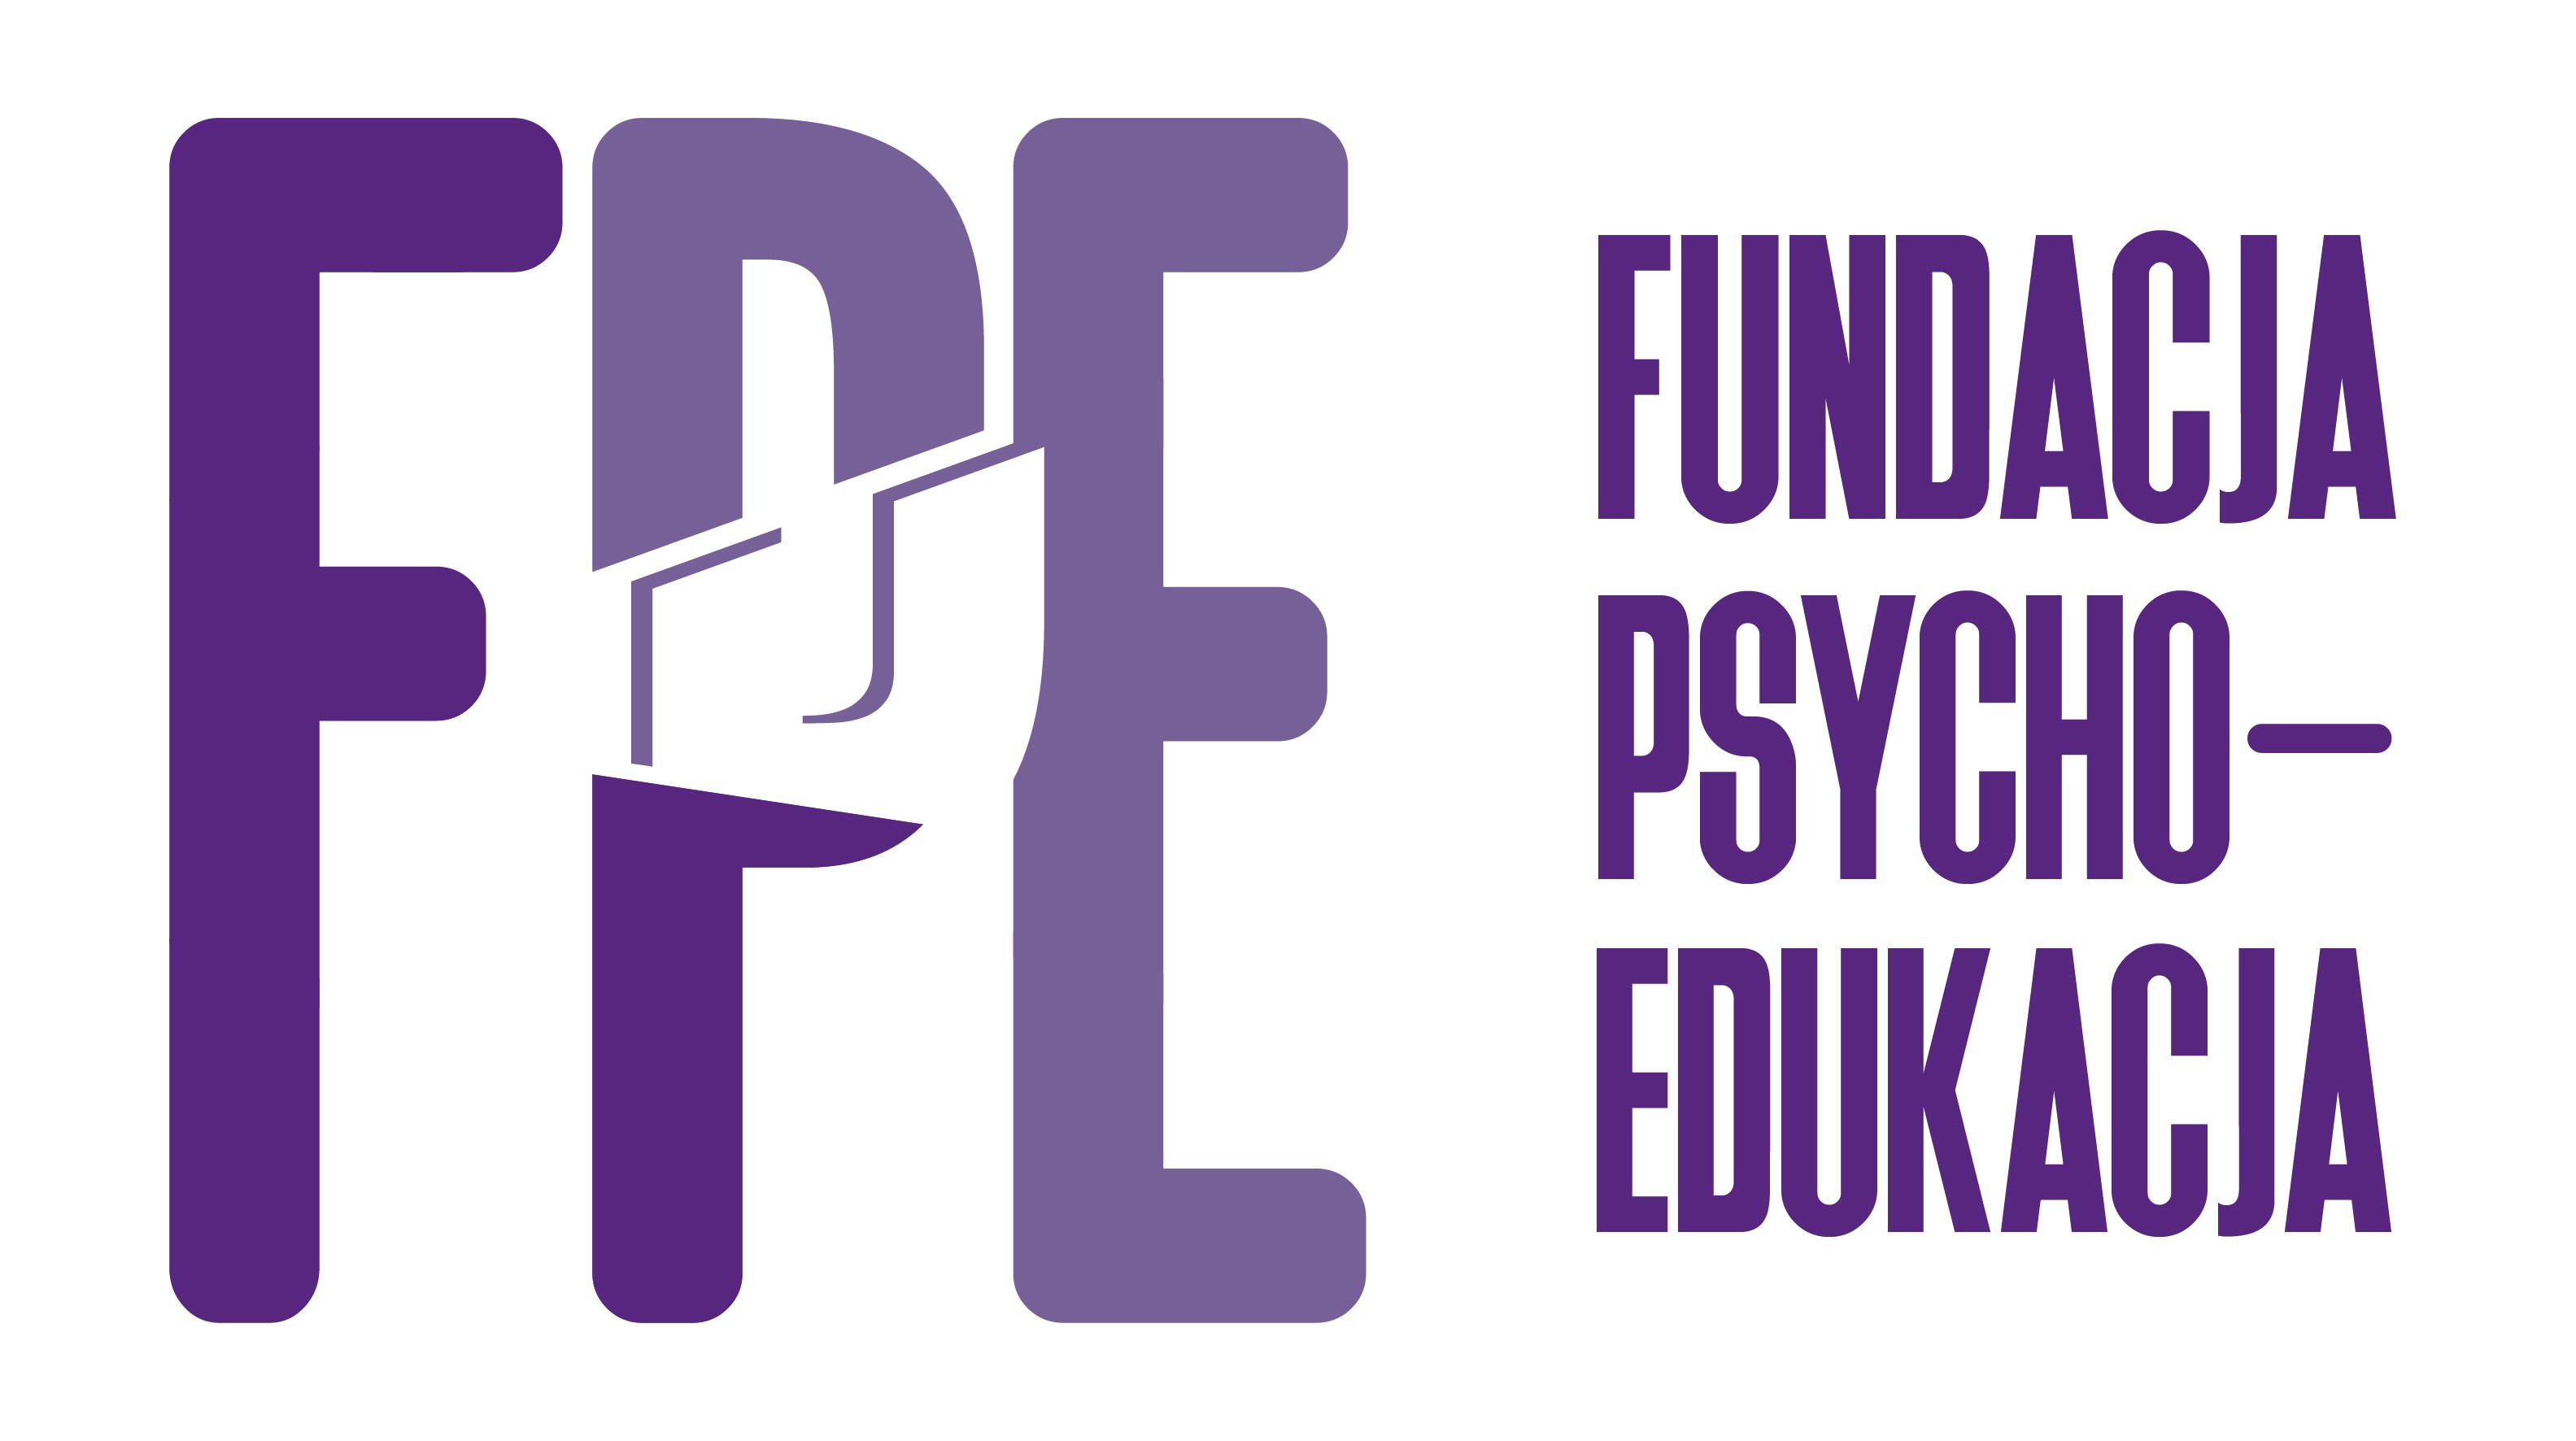 Fundacja Psycho-Edukacja